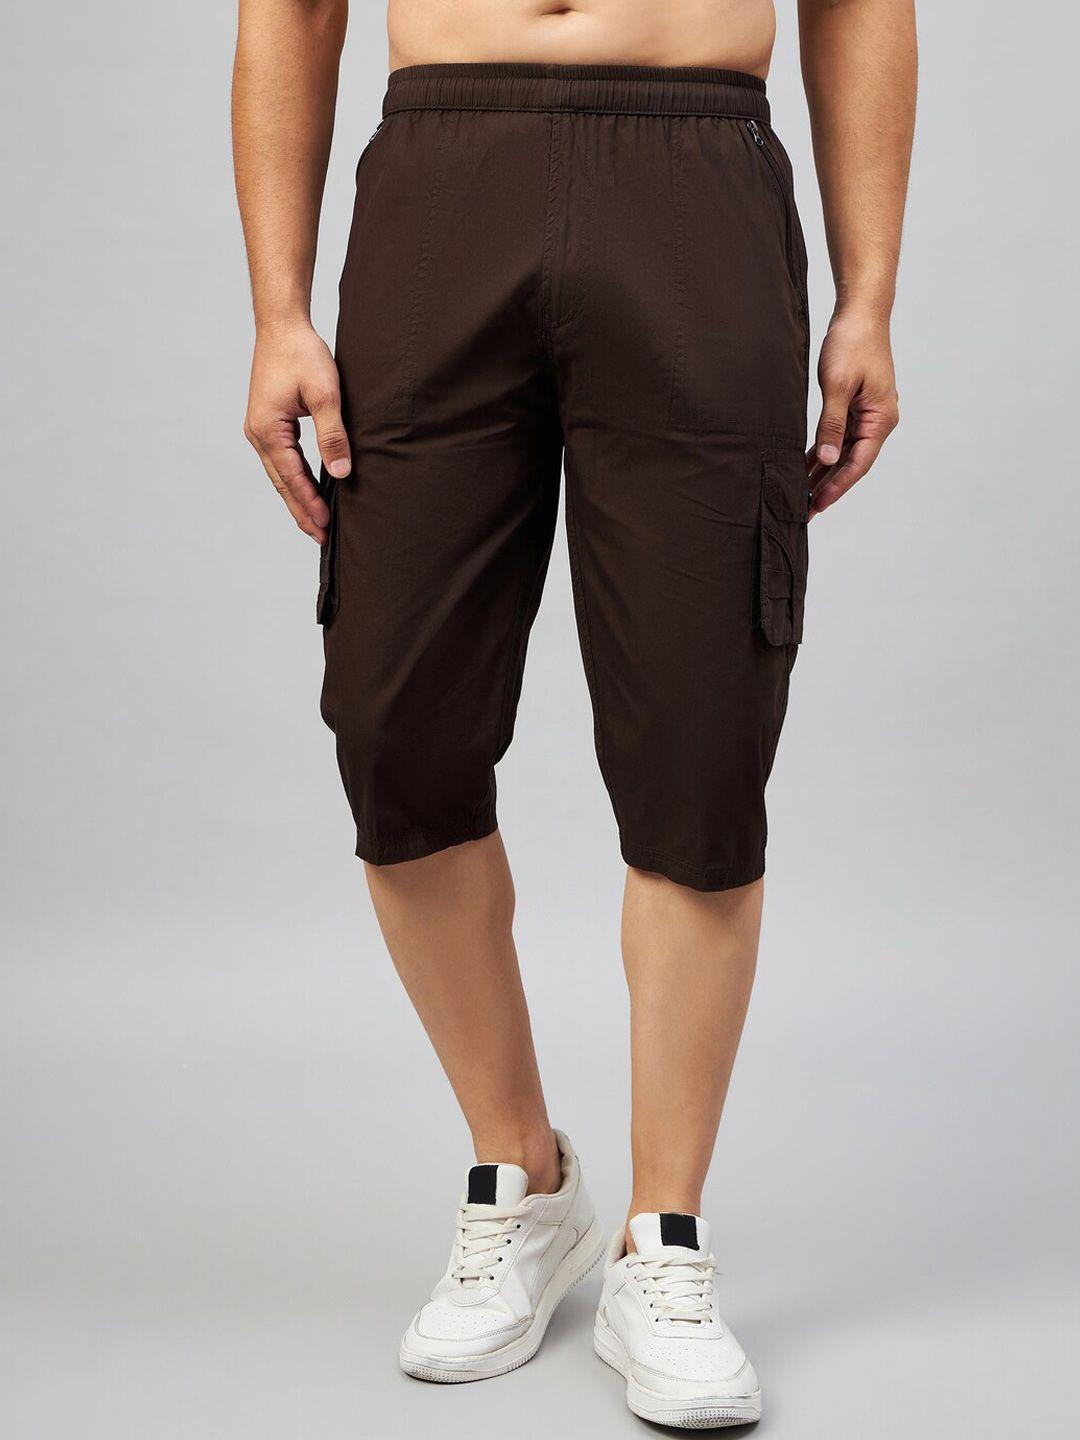 studio nexx men brown loose fit shorts